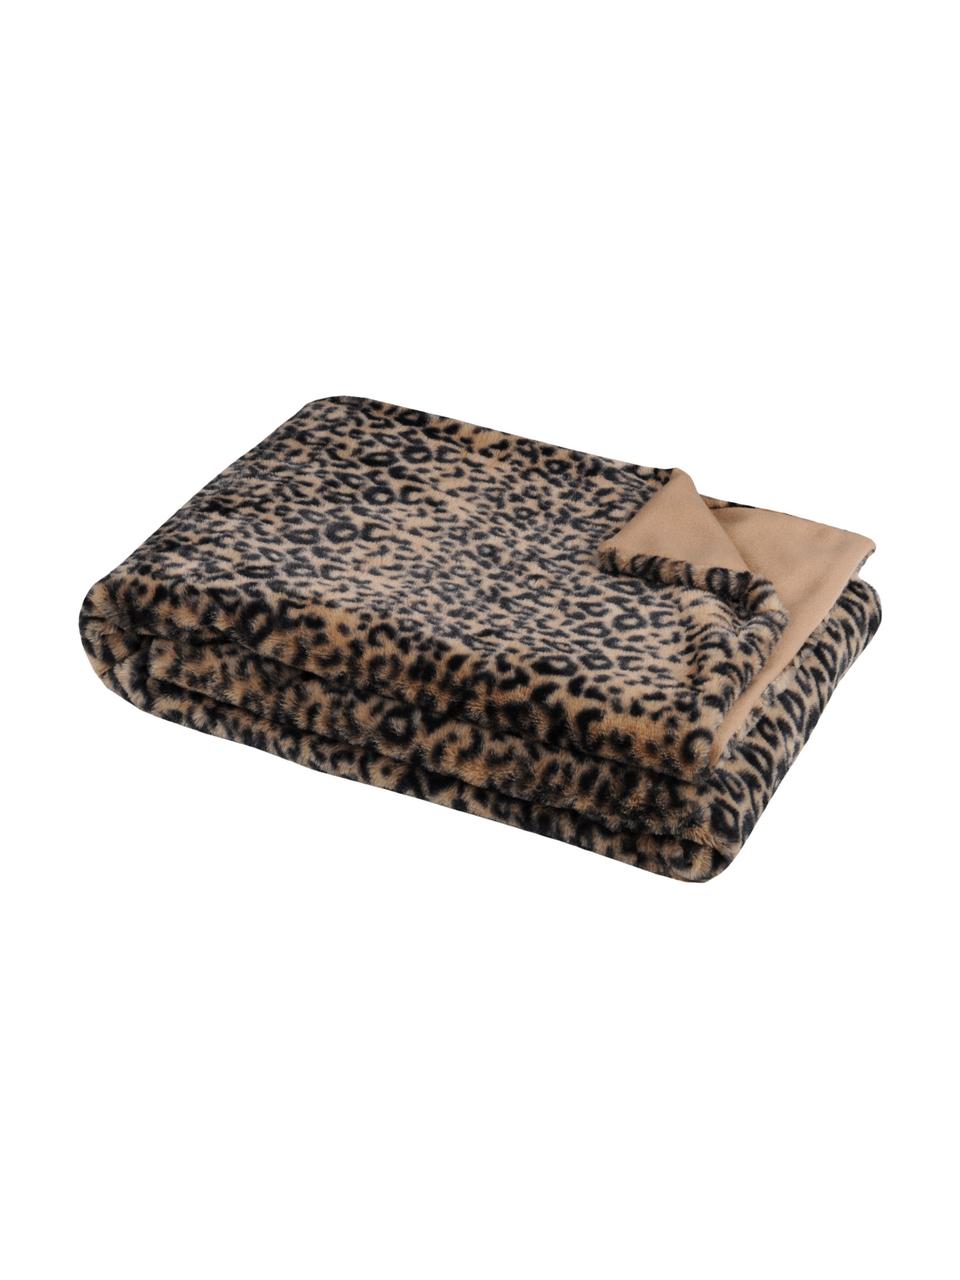 Plaid Jangal met luipaardprint, 100% polyester, Beige, zwart, 130 x 160 cm